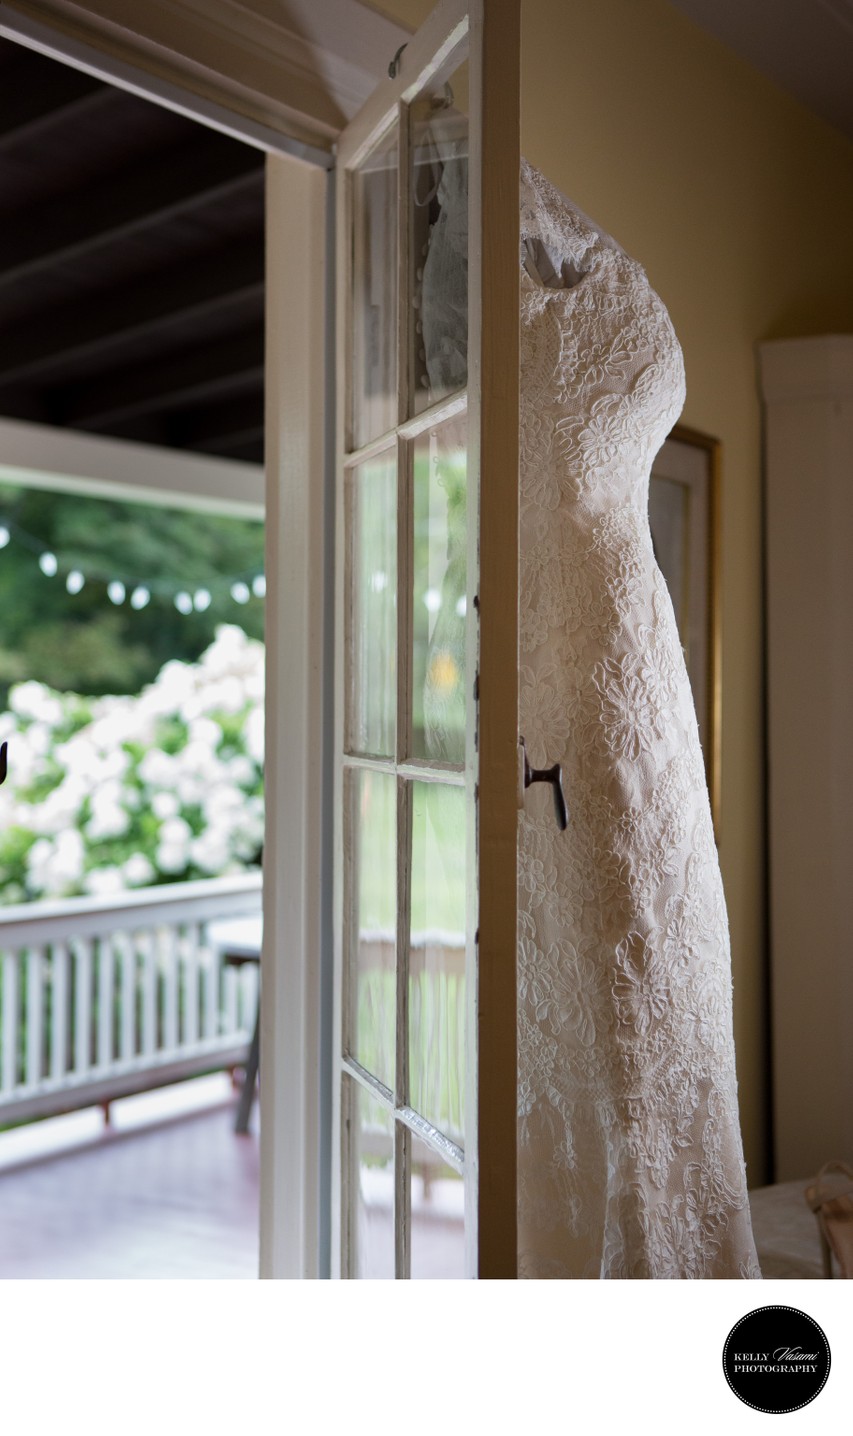 Bridal Gown hanging in Doorway | Farmhouse Wedding